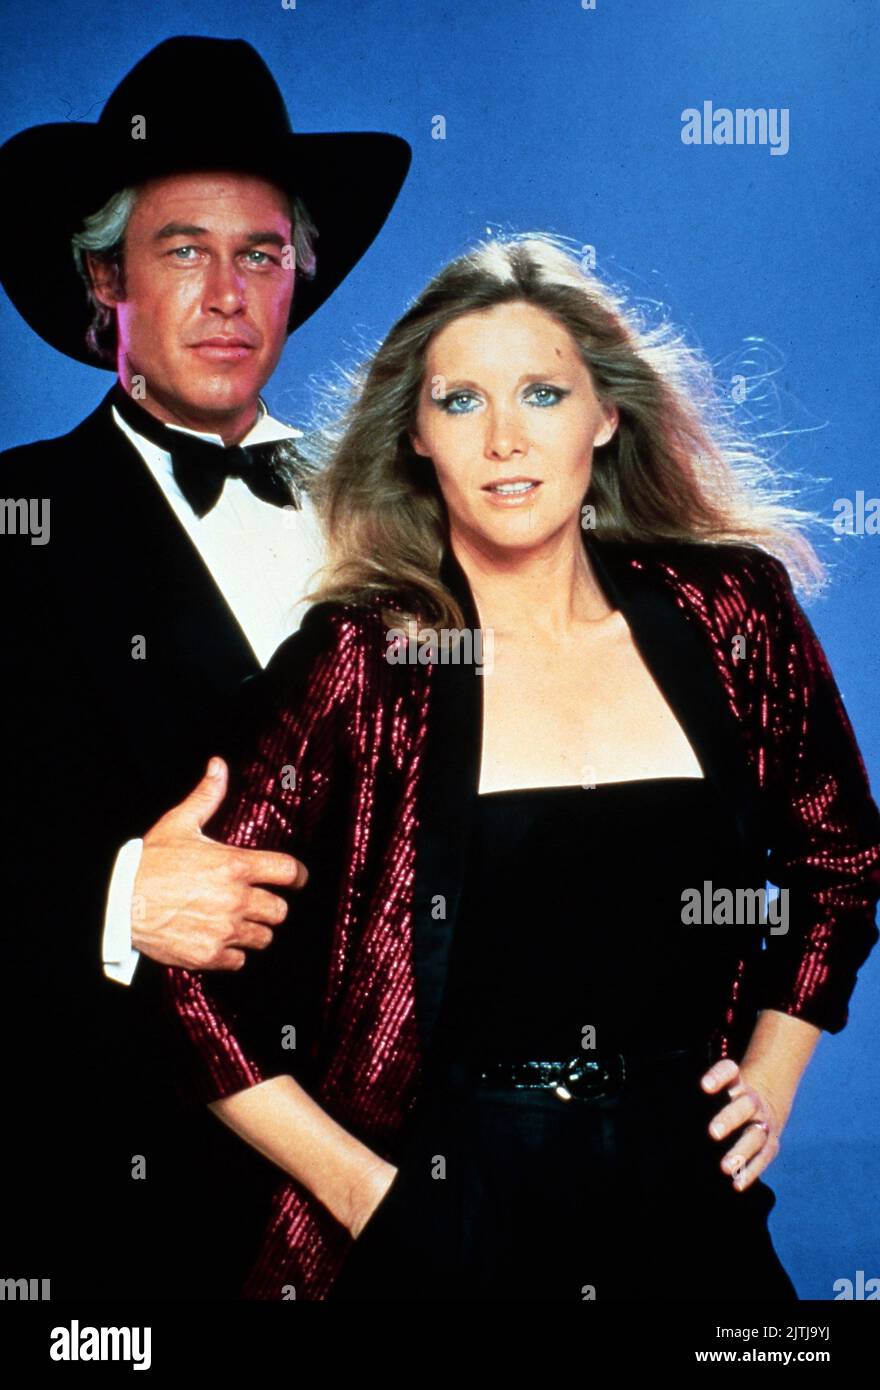 Dallas, Fernsehserie, USA 1978 - 1991, Darsteller: Steve Kanaly, Susan Howard Foto Stock